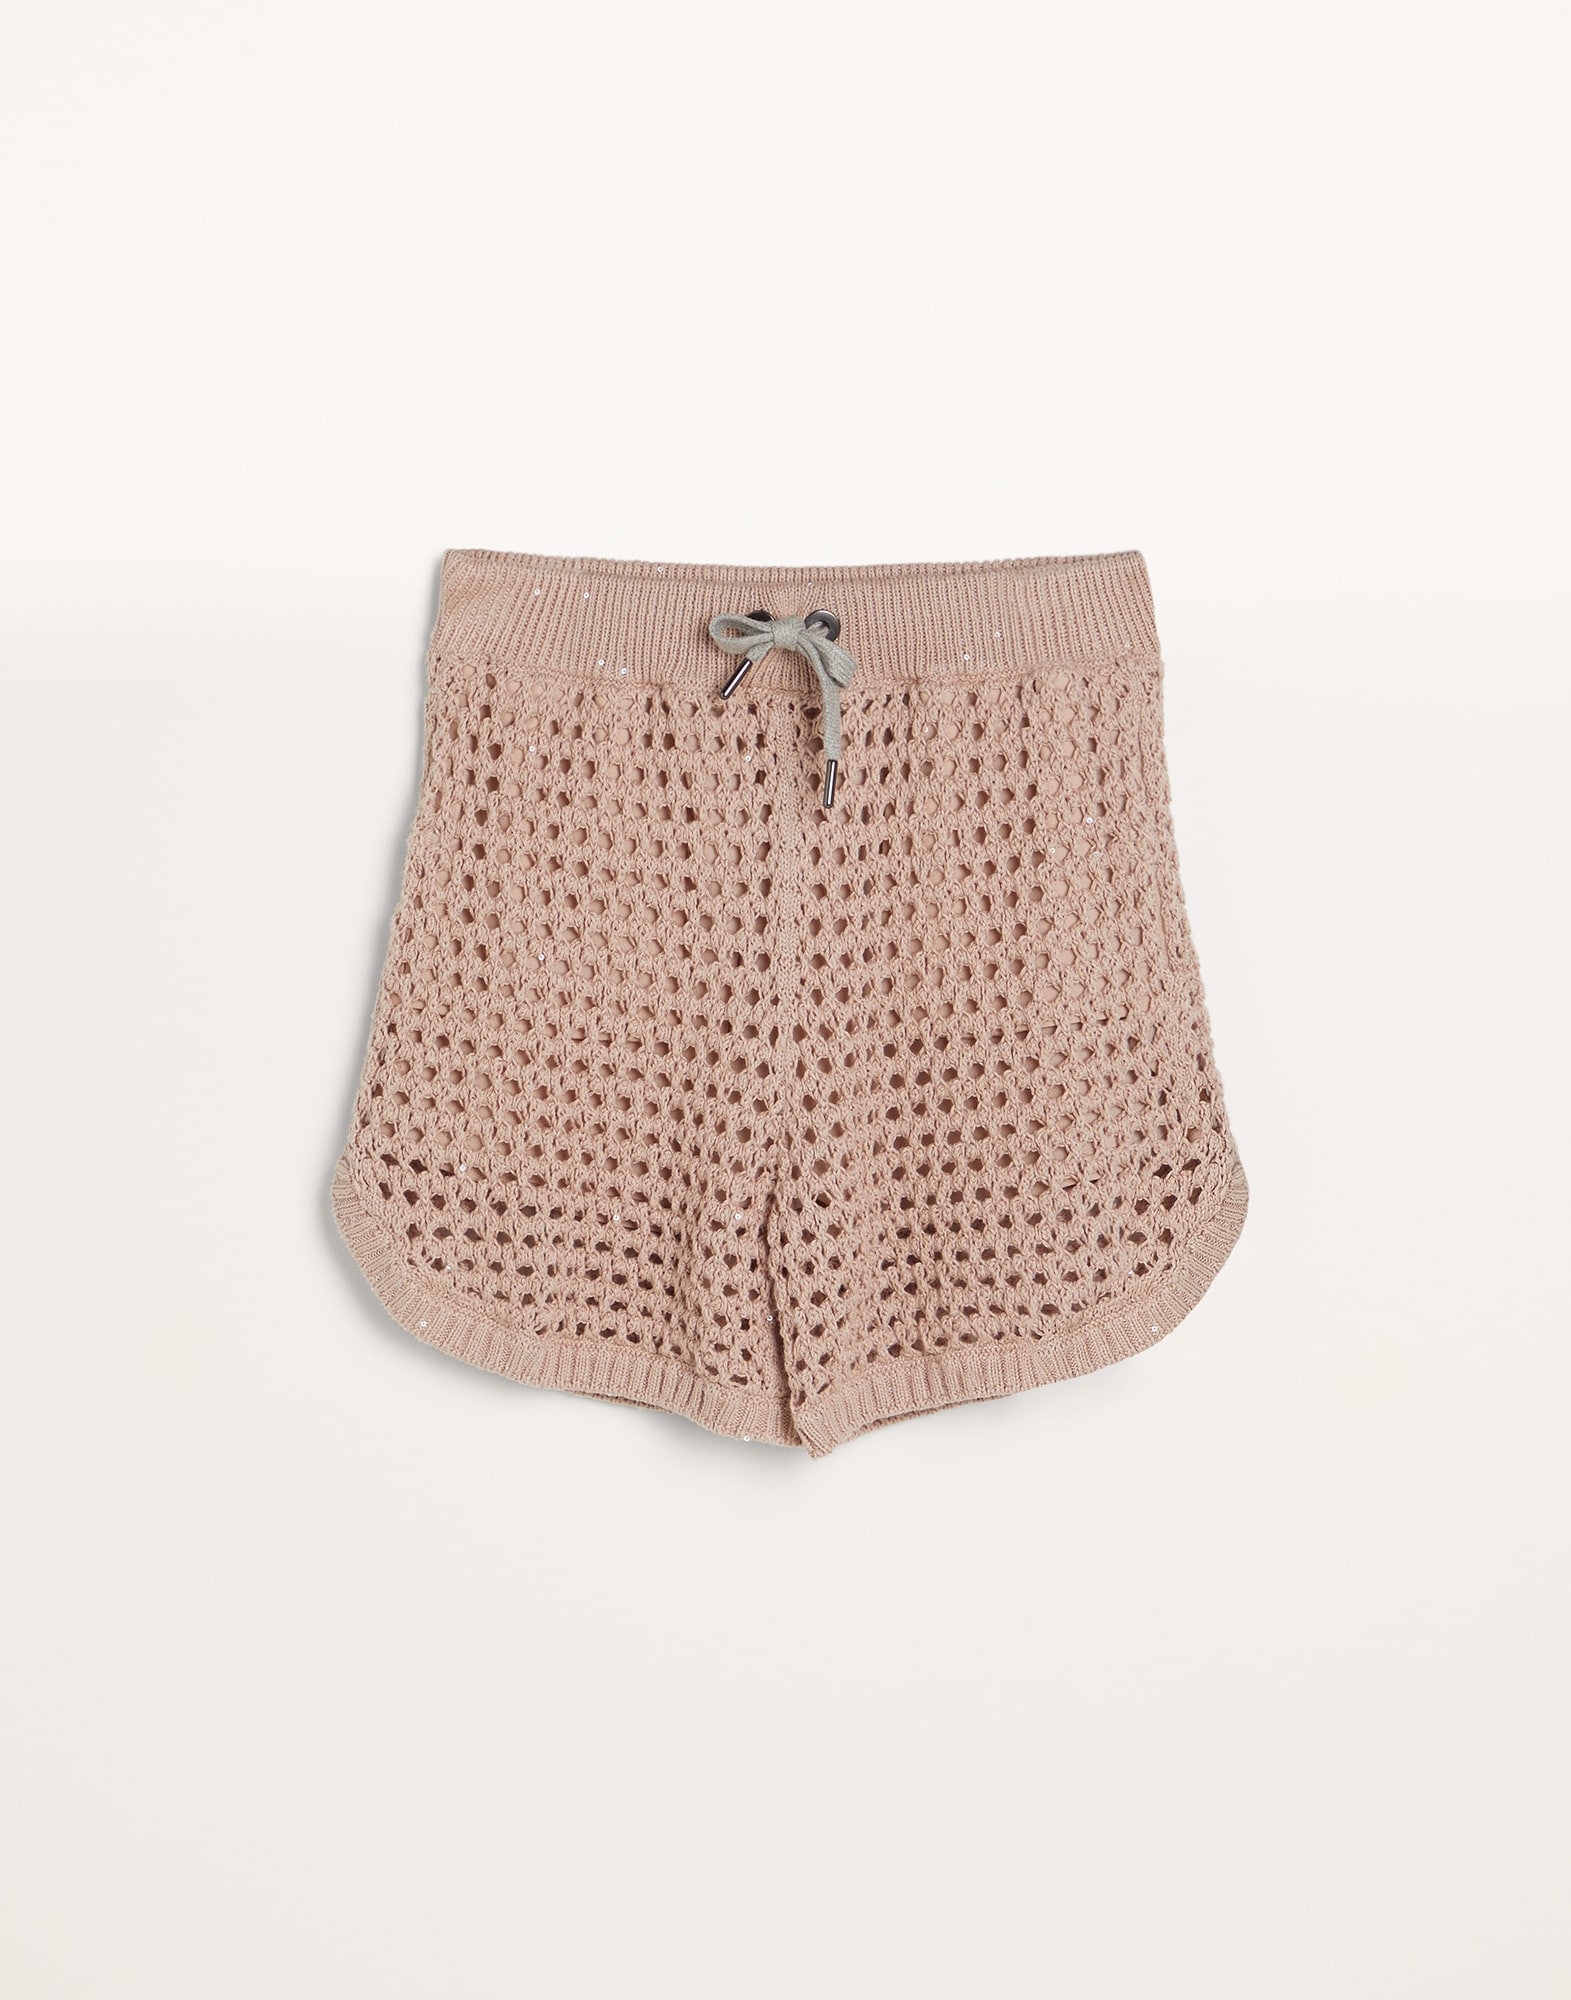 Dazzling Net shorts